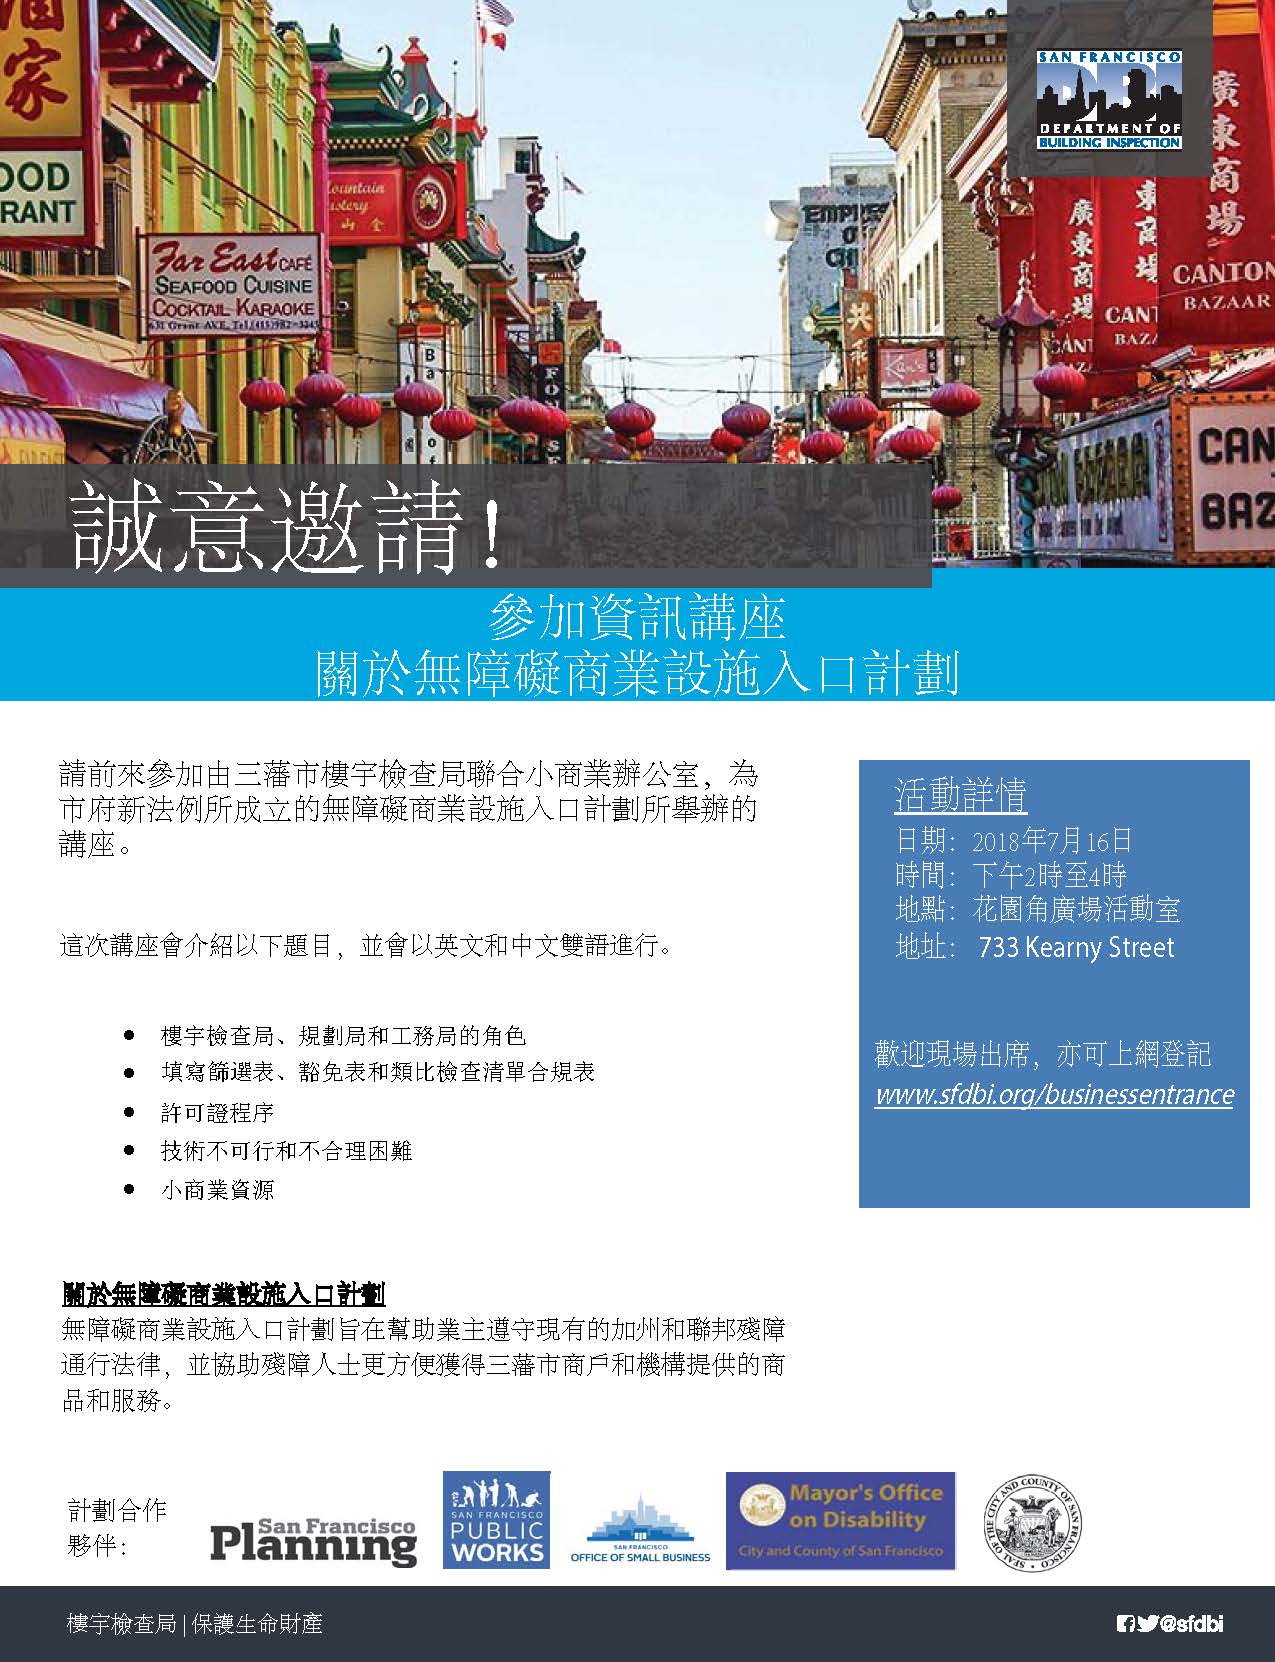 ABE Workshop in Chinatown on July 16